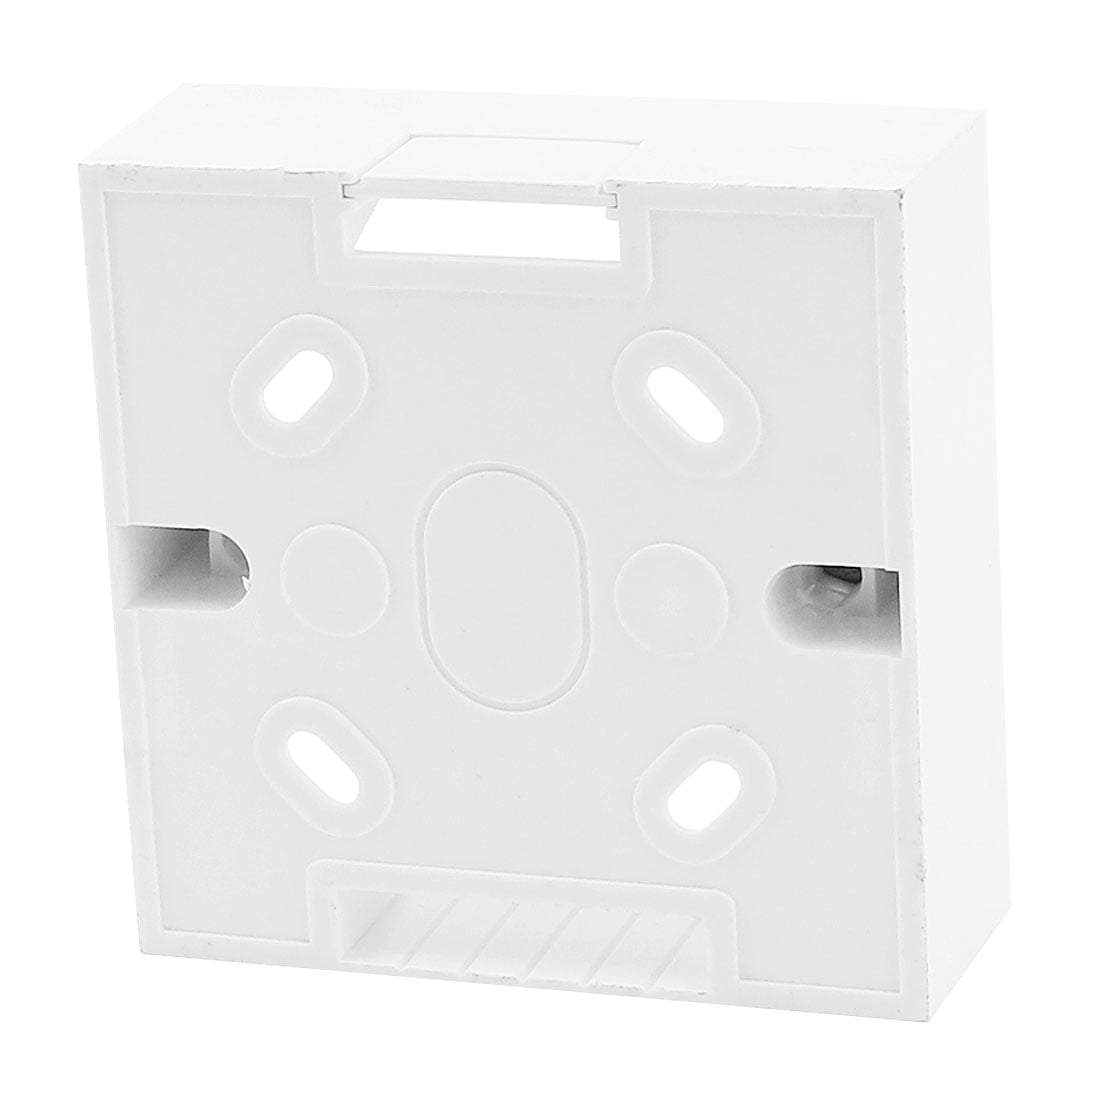 2 X 86mm x 86mm x 32mm Plastic Dual Sockets Mount Back Box Wall Socket White 